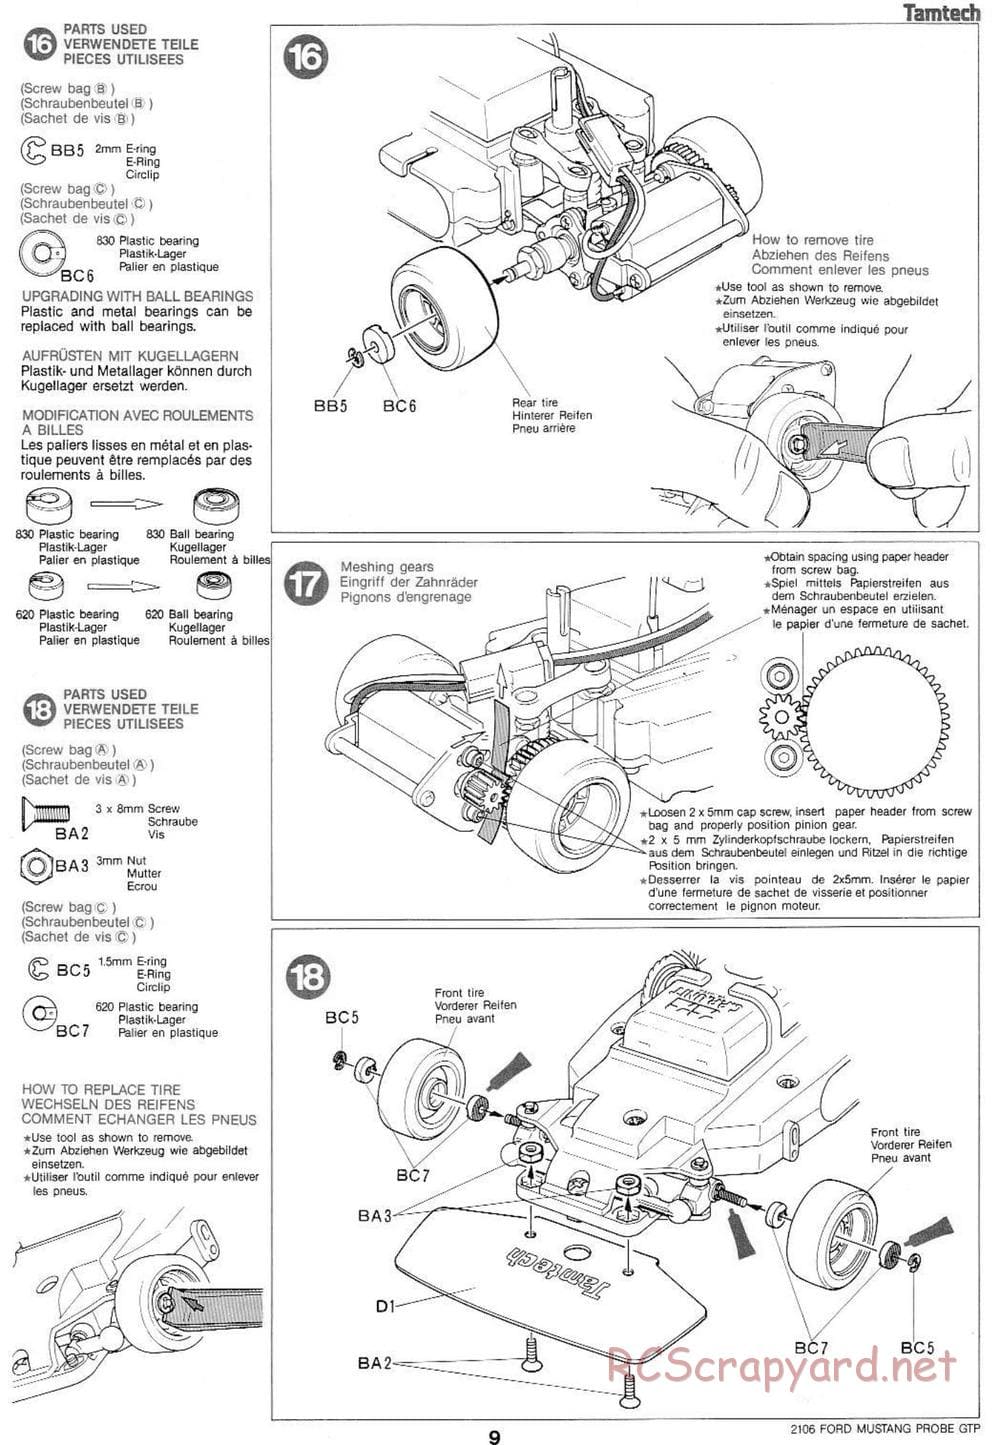 Tamiya - Tamtech - Ford Mustang Probe GTP Chassis - Manual - Page 9